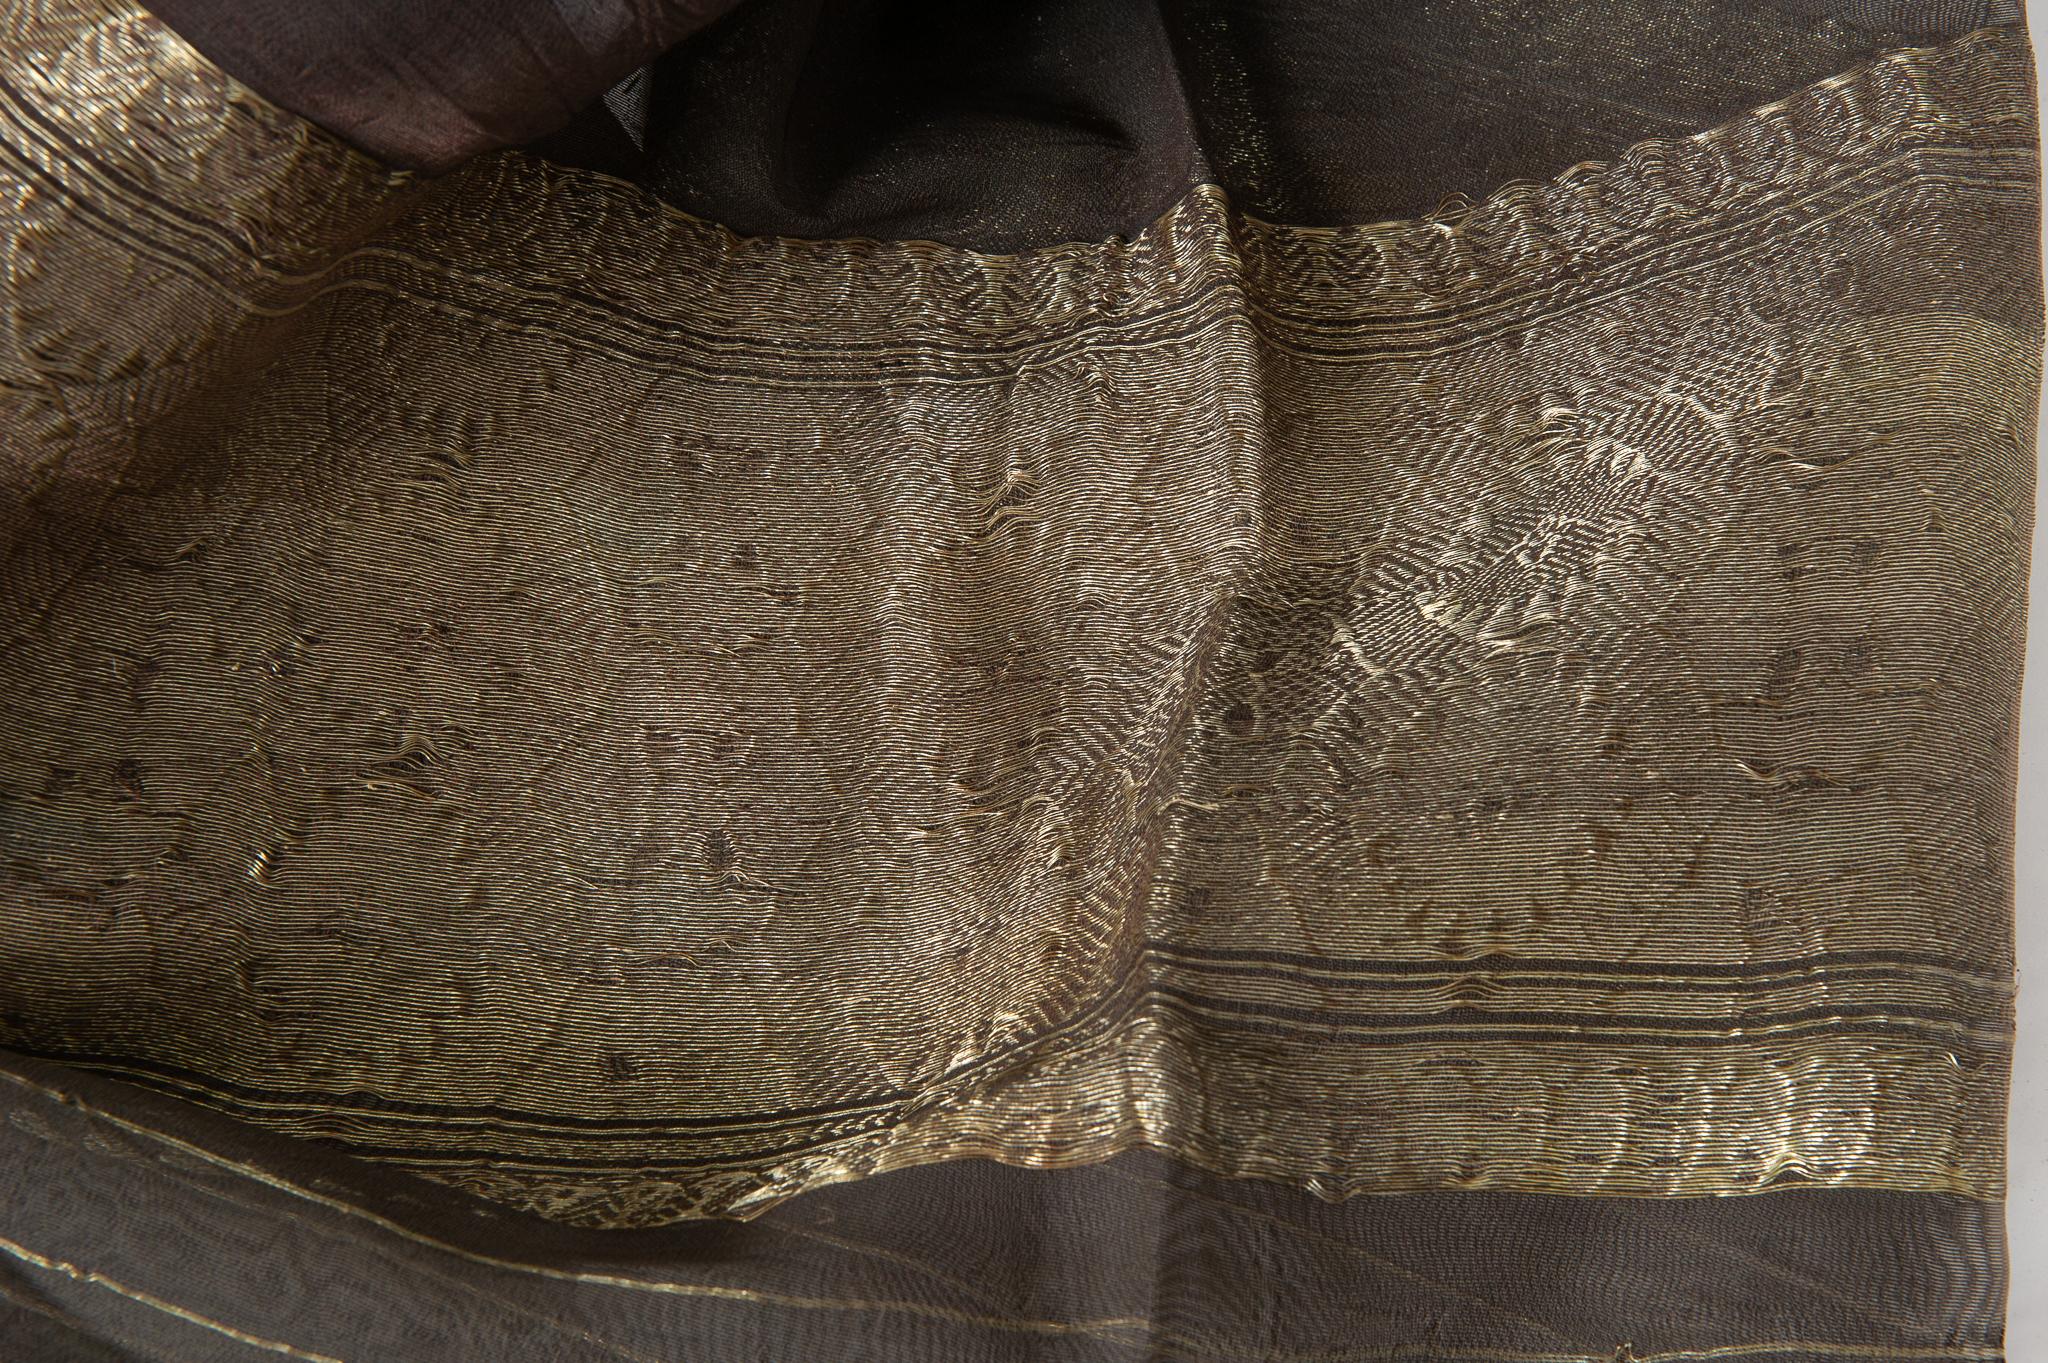 Vintage Indian Sari Dark Brown Color, Unusual Curtains or an Evening Dress 7